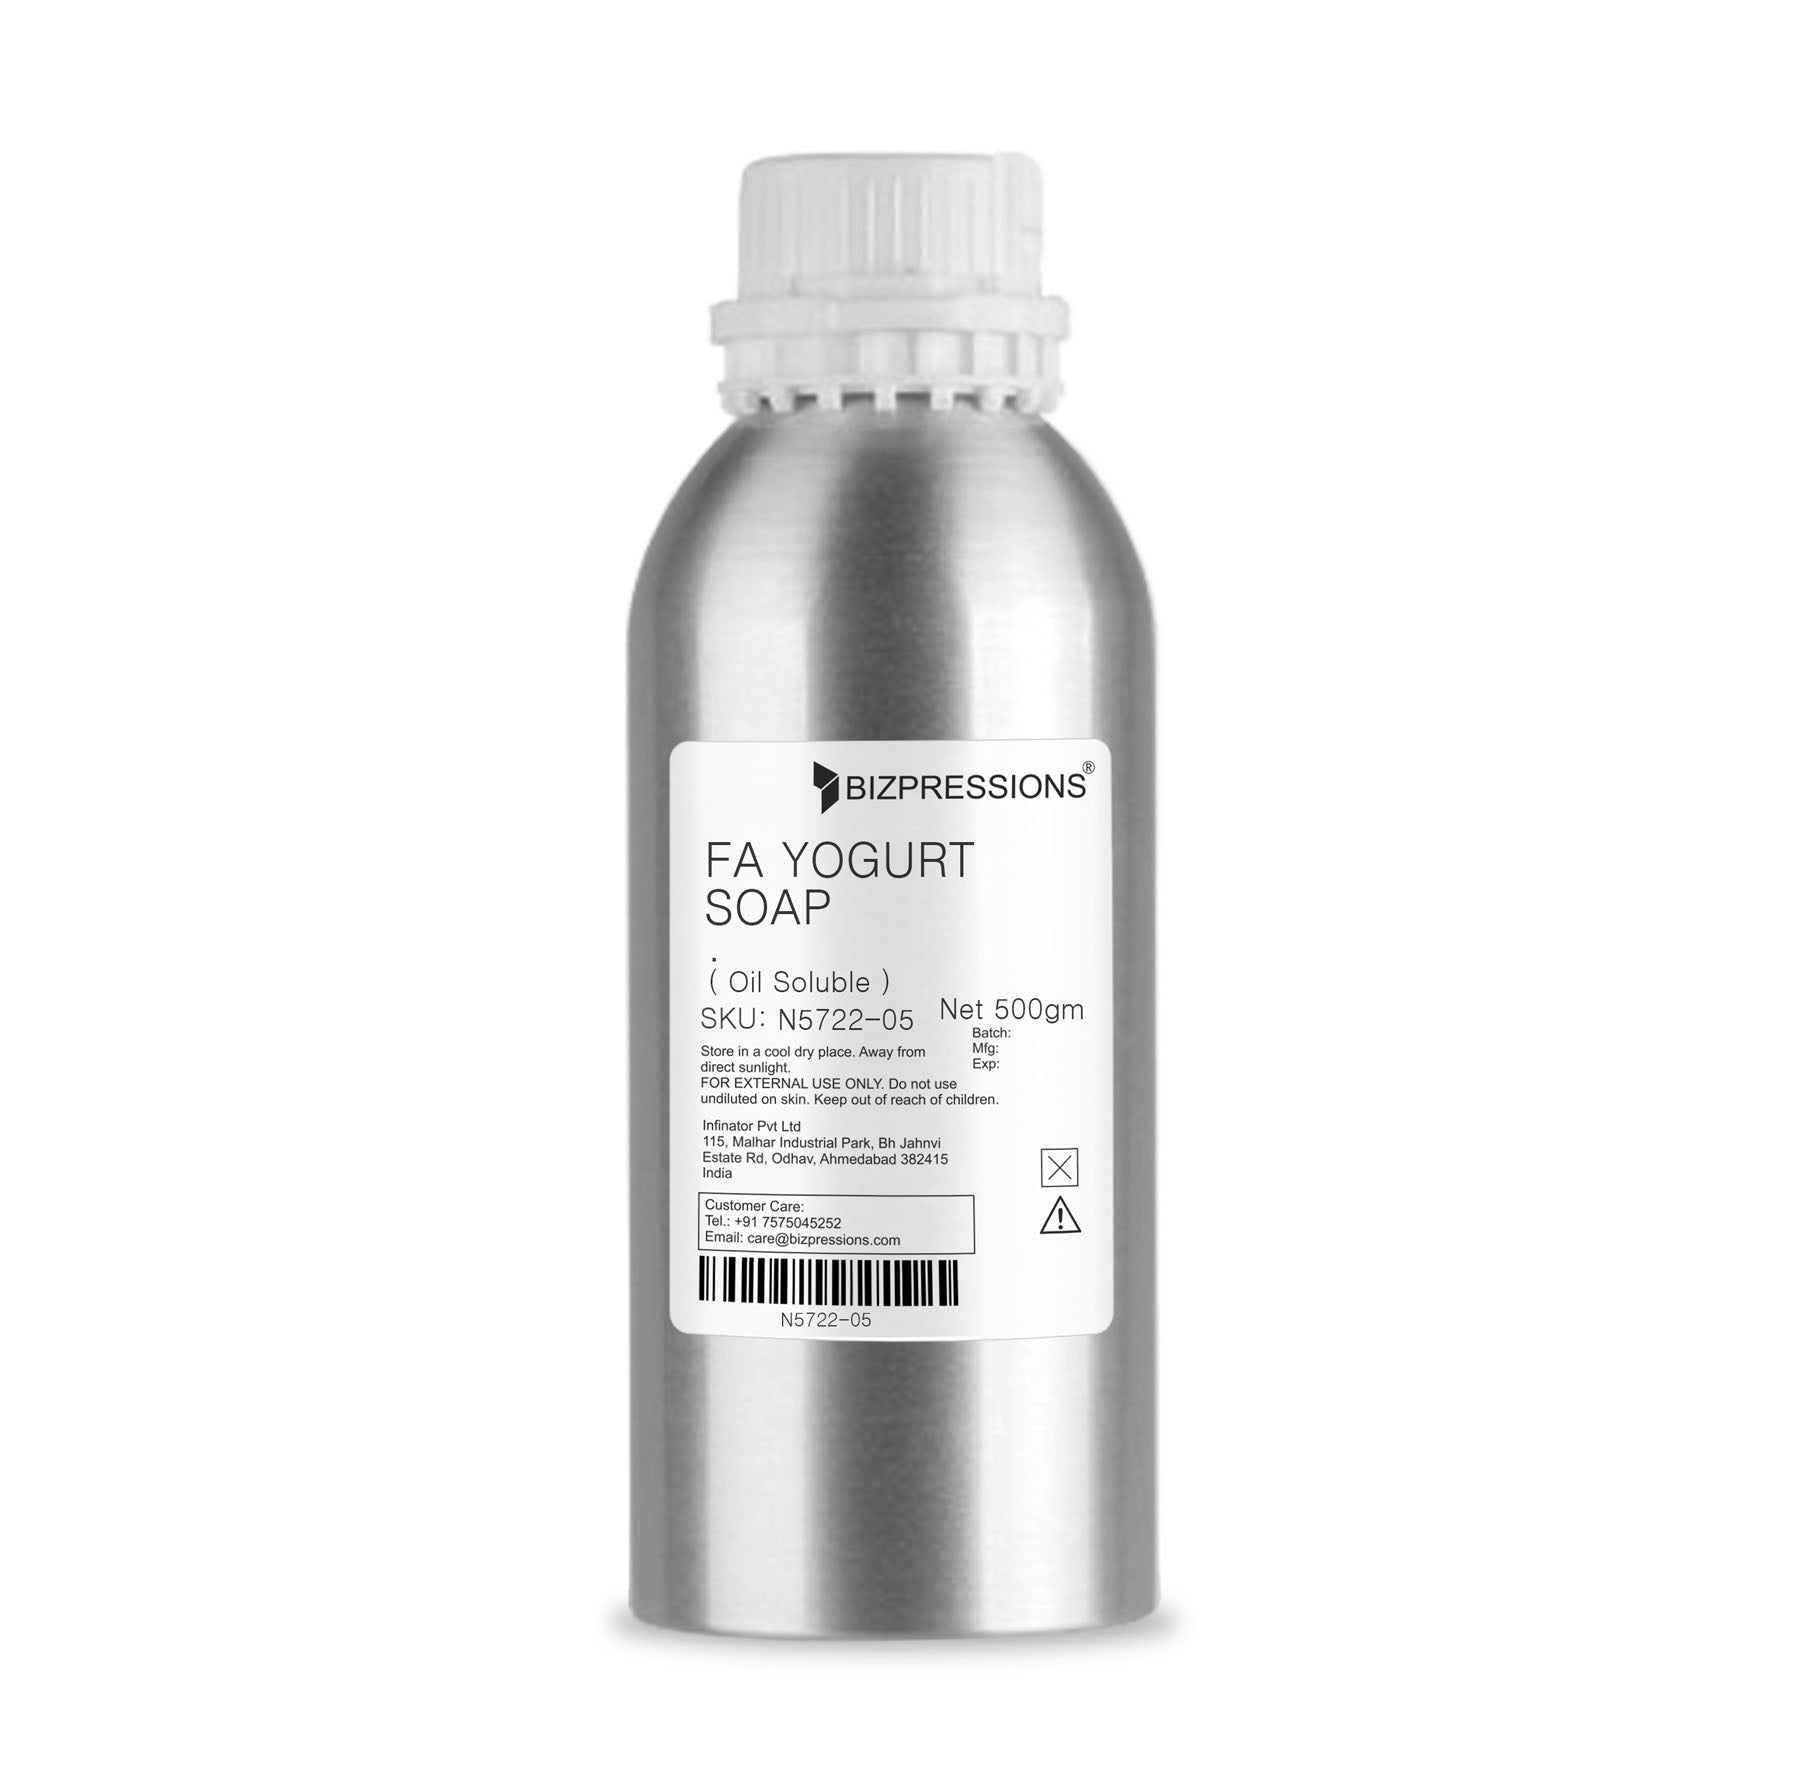 FA YOGURT SOAP - Fragrance ( Oil Soluble ) - 500 gm